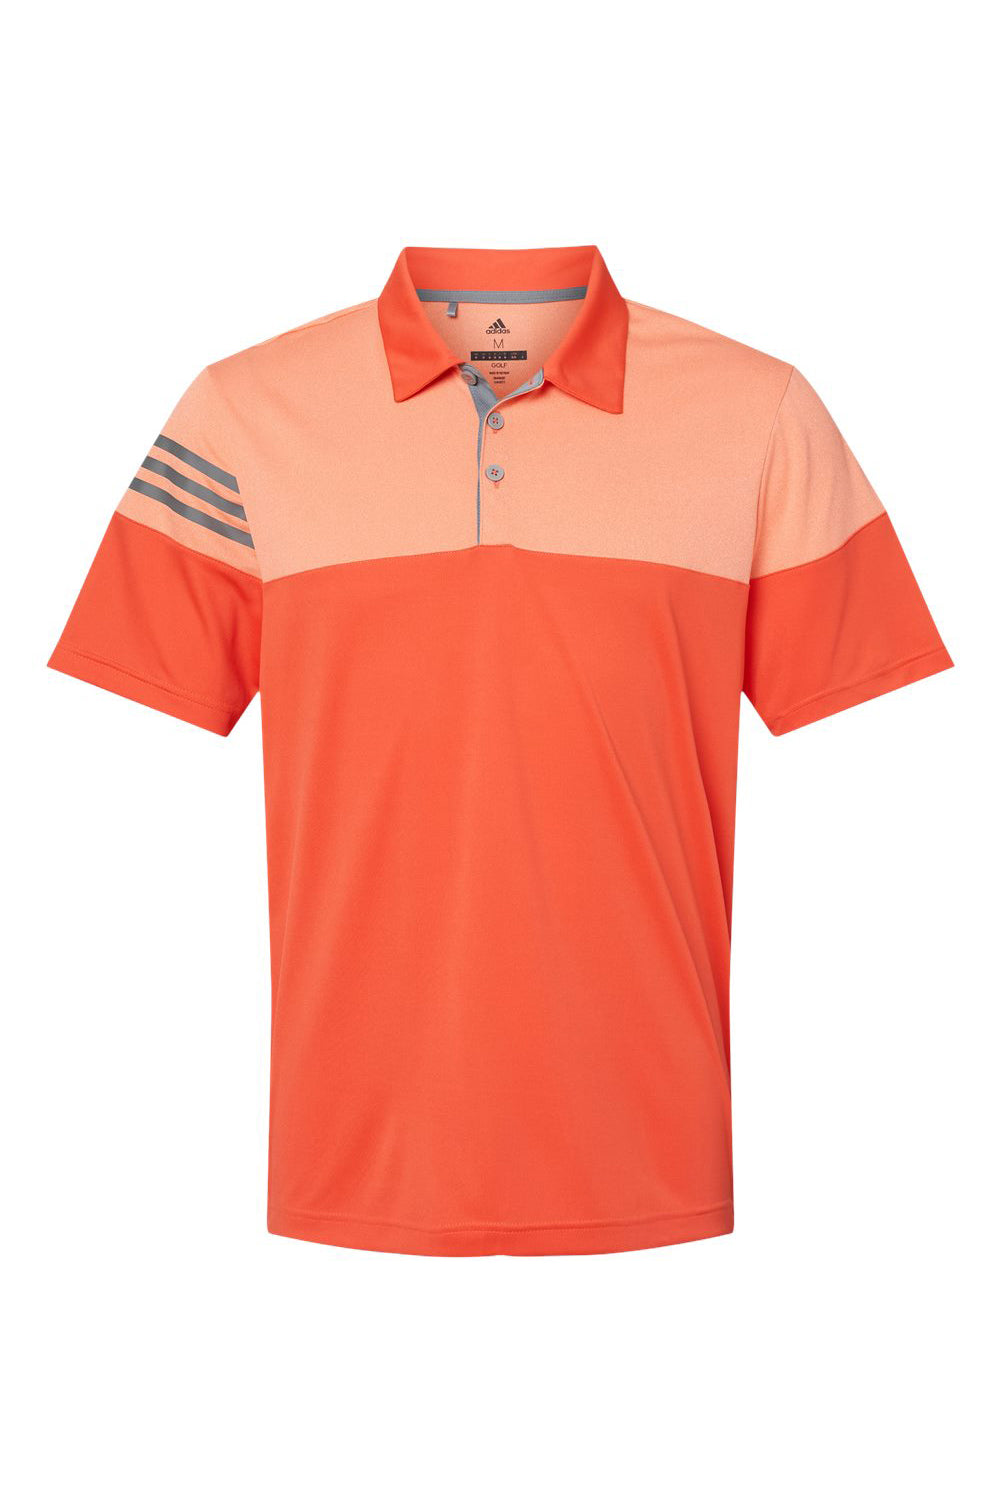 Adidas A213 Mens 3 Stripes Heathered Colorblock Short Sleeve Polo Shirt Blaze Orange/Vista Grey Flat Front